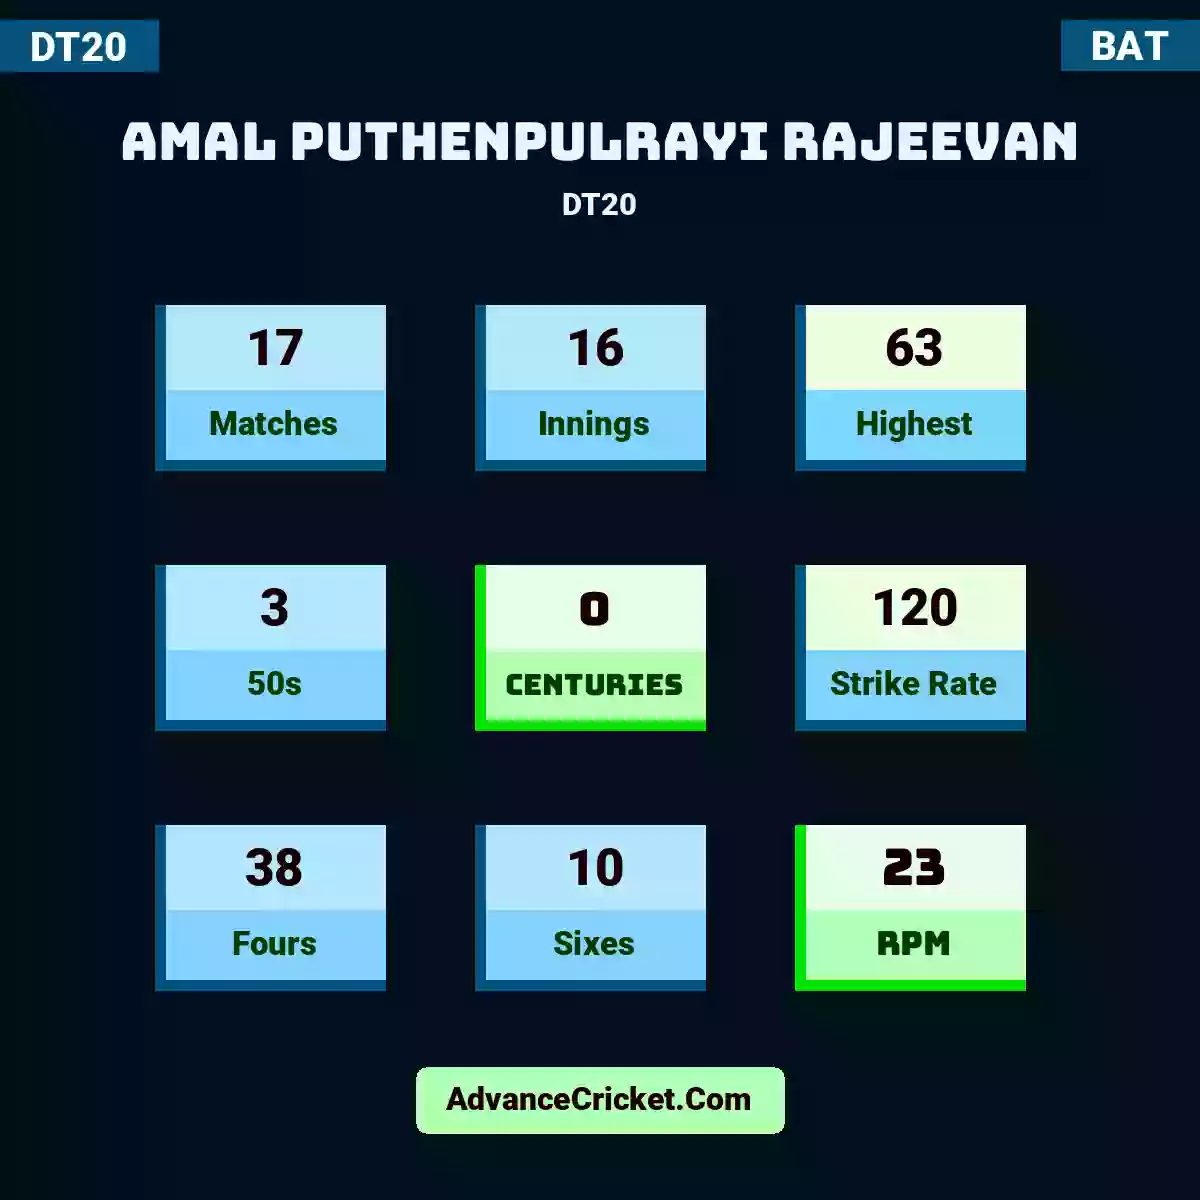 Amal Puthenpulrayi Rajeevan DT20 , Amal Puthenpulrayi Rajeevan played 17 matches, scored 63 runs as highest, 3 half-centuries, and 0 centuries, with a strike rate of 120. A.Puthenpulrayi.Rajeevan hit 38 fours and 10 sixes, with an RPM of 23.